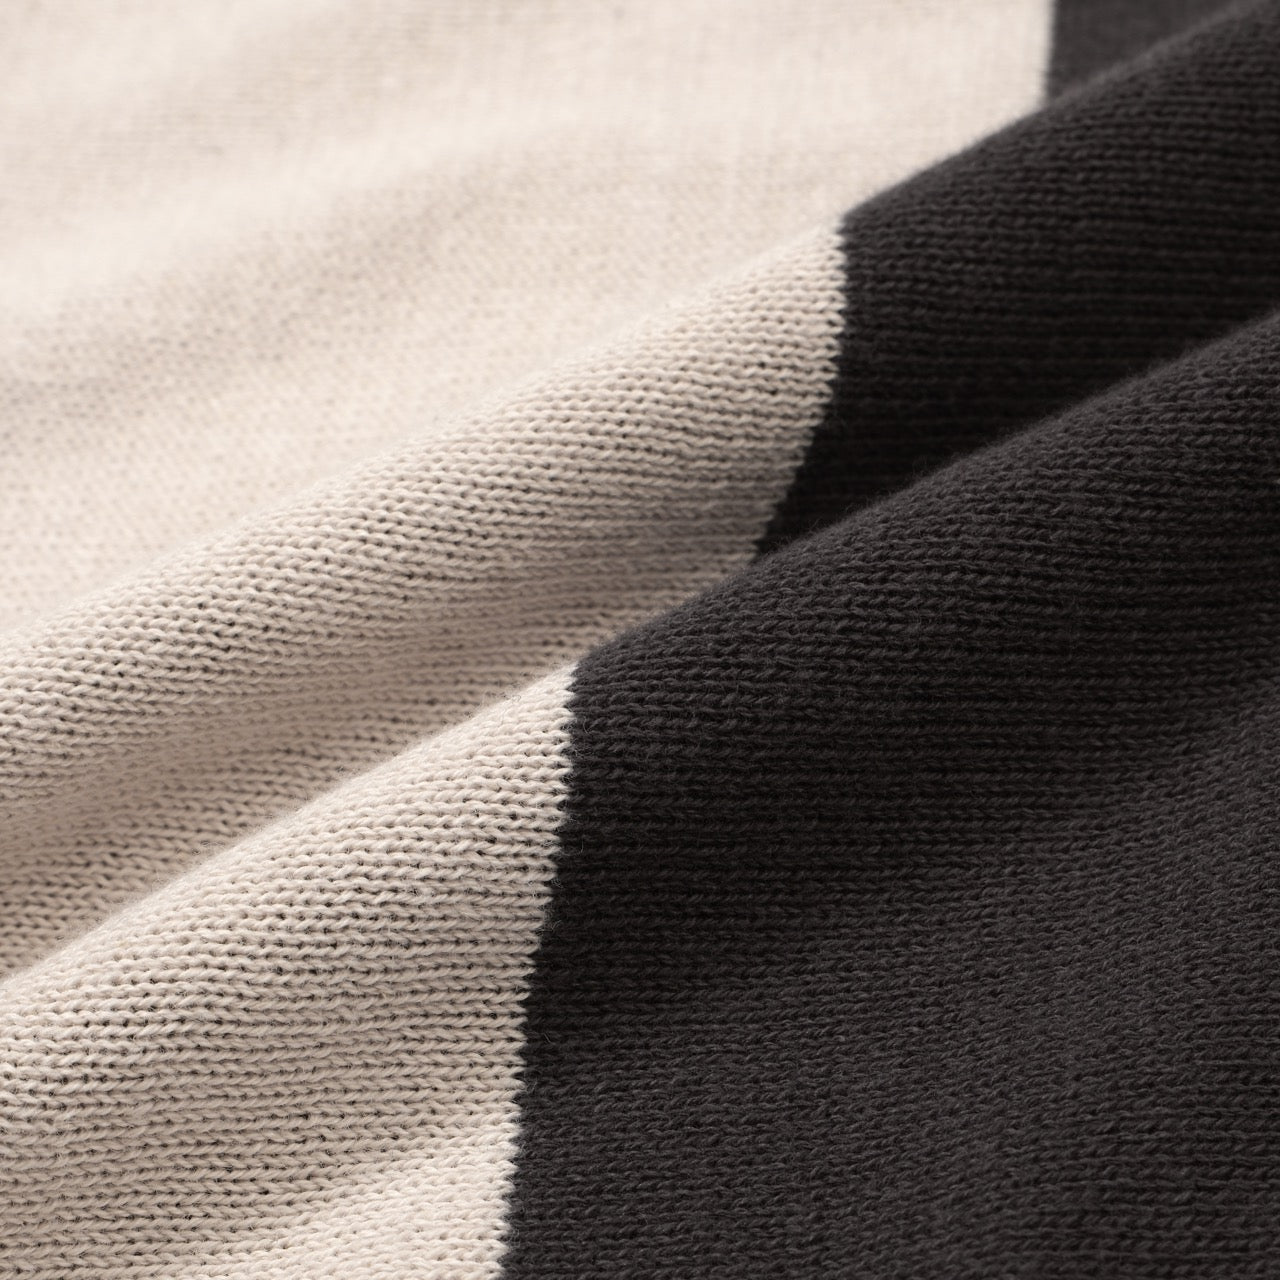 OXKNIT Men Vintage Clothing 1960s Mod Style Casual Black-Gray Stripe Knit Retro Polo